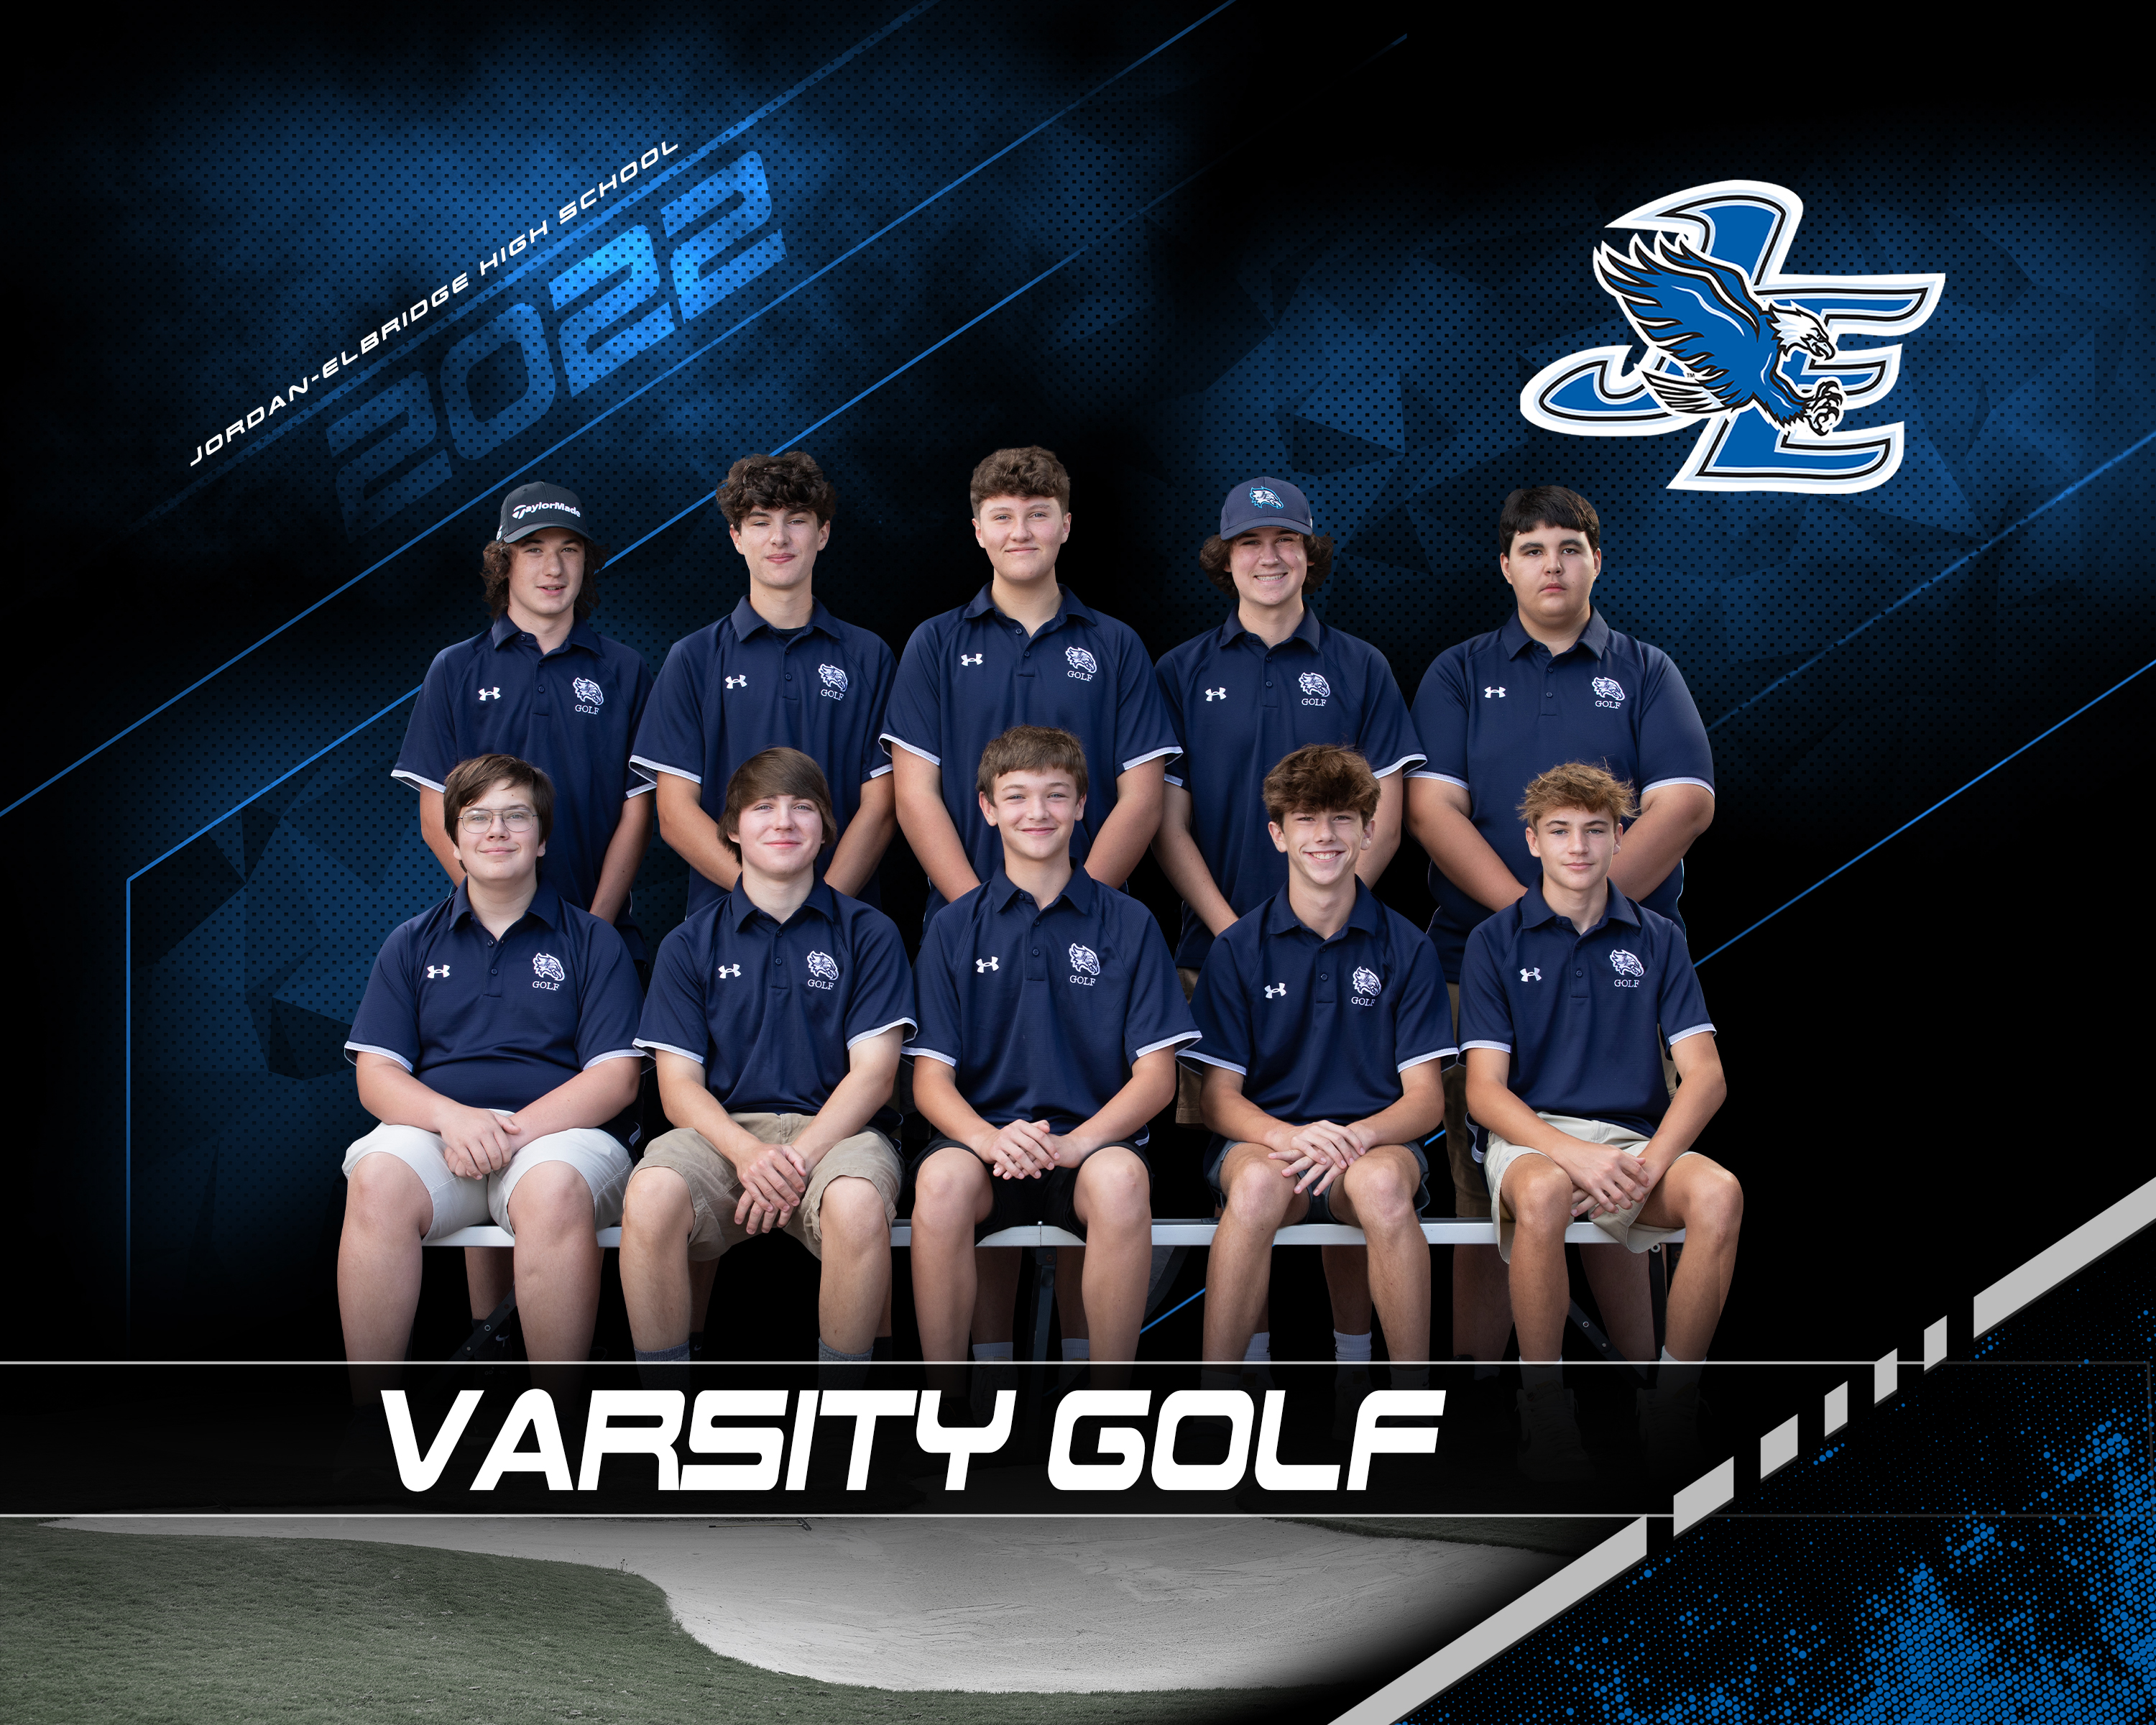 The varsity golf team is a scholar-athlete team